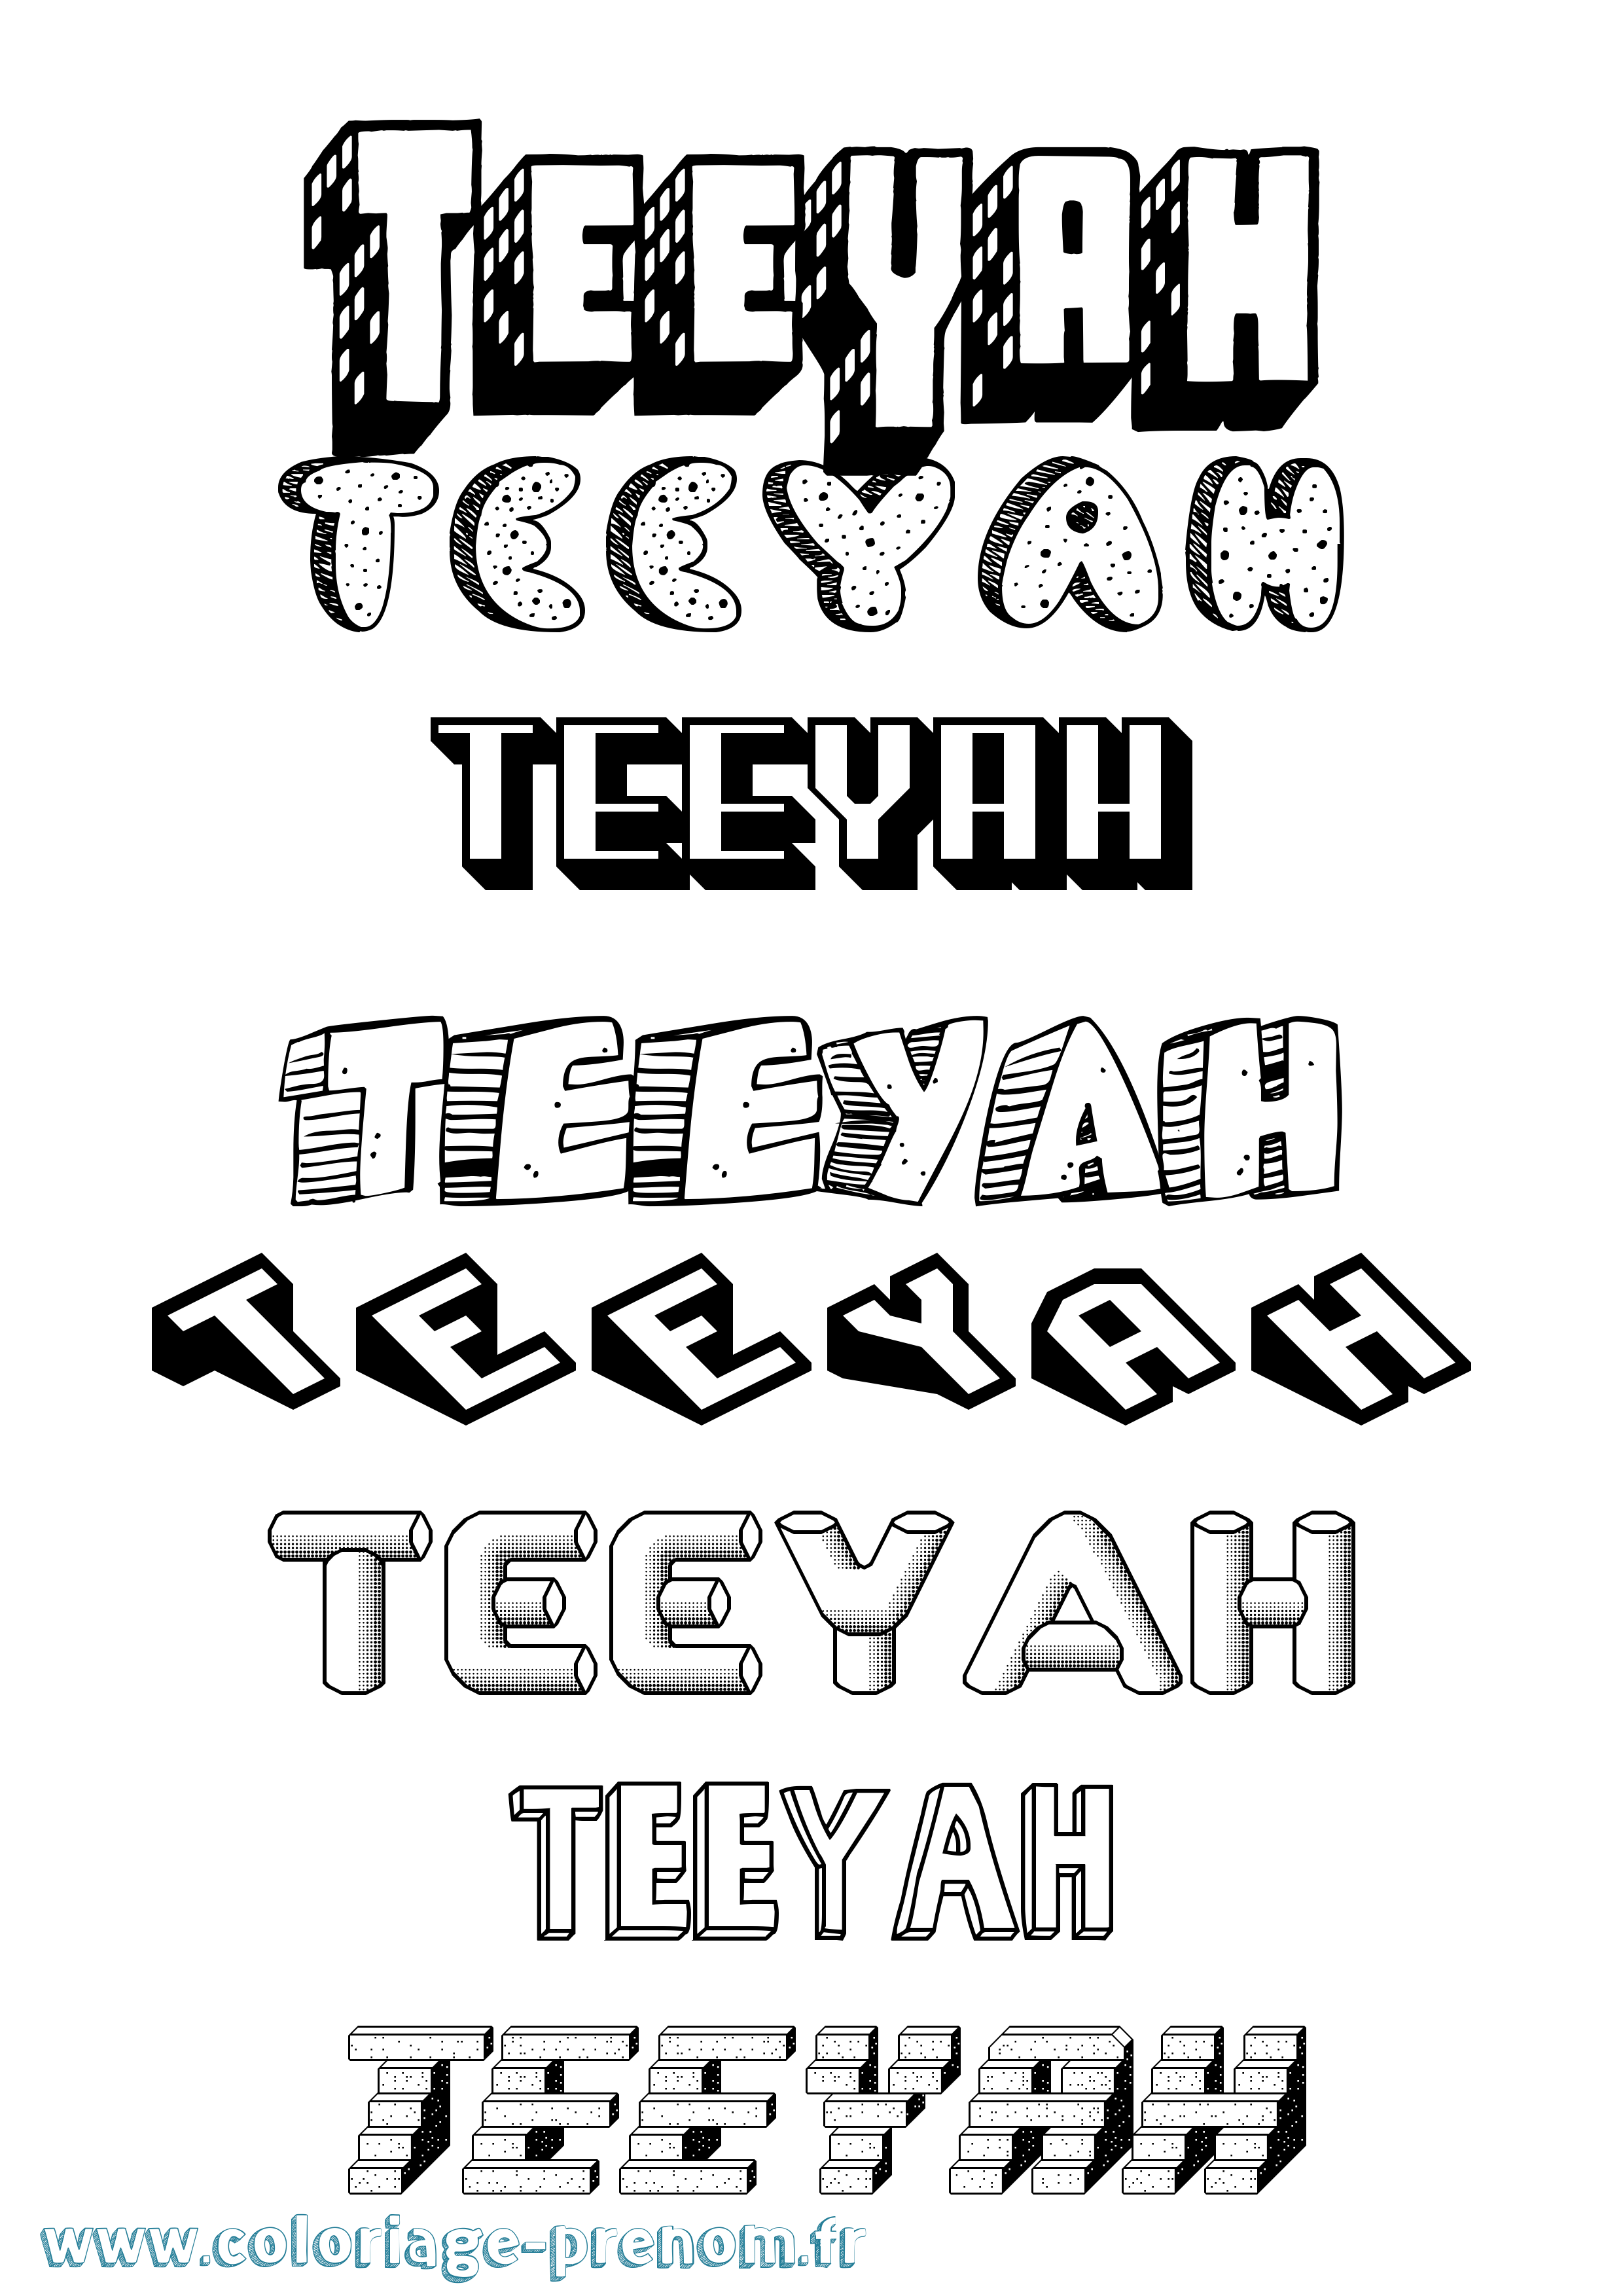 Coloriage prénom Teeyah Effet 3D